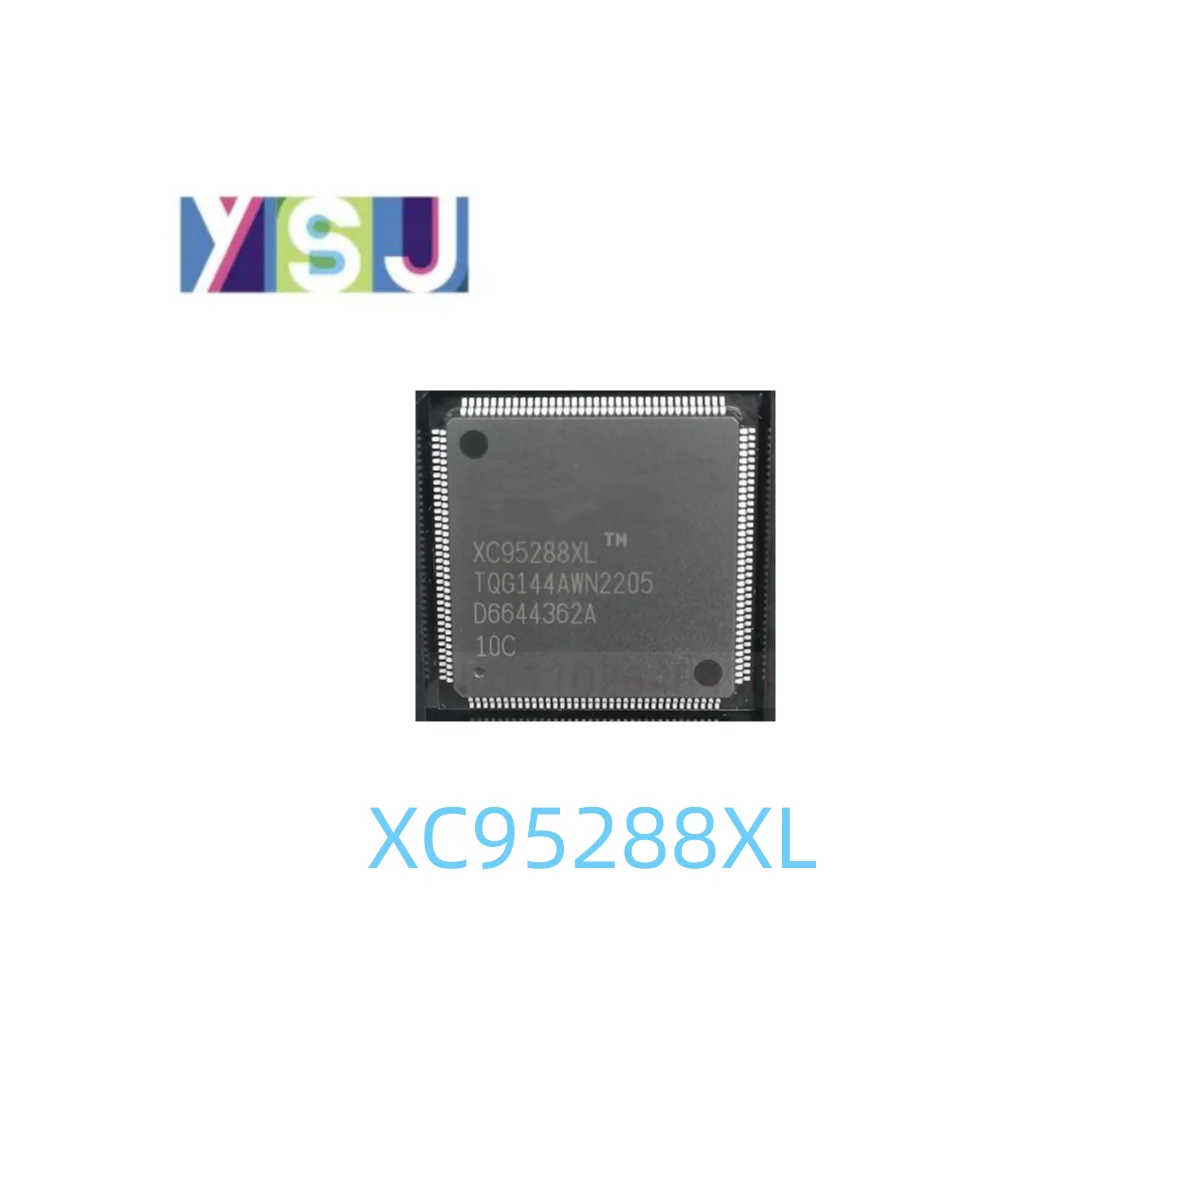 

XC95288XL IC CPLD FPGA Original Field Programmable Gate Array